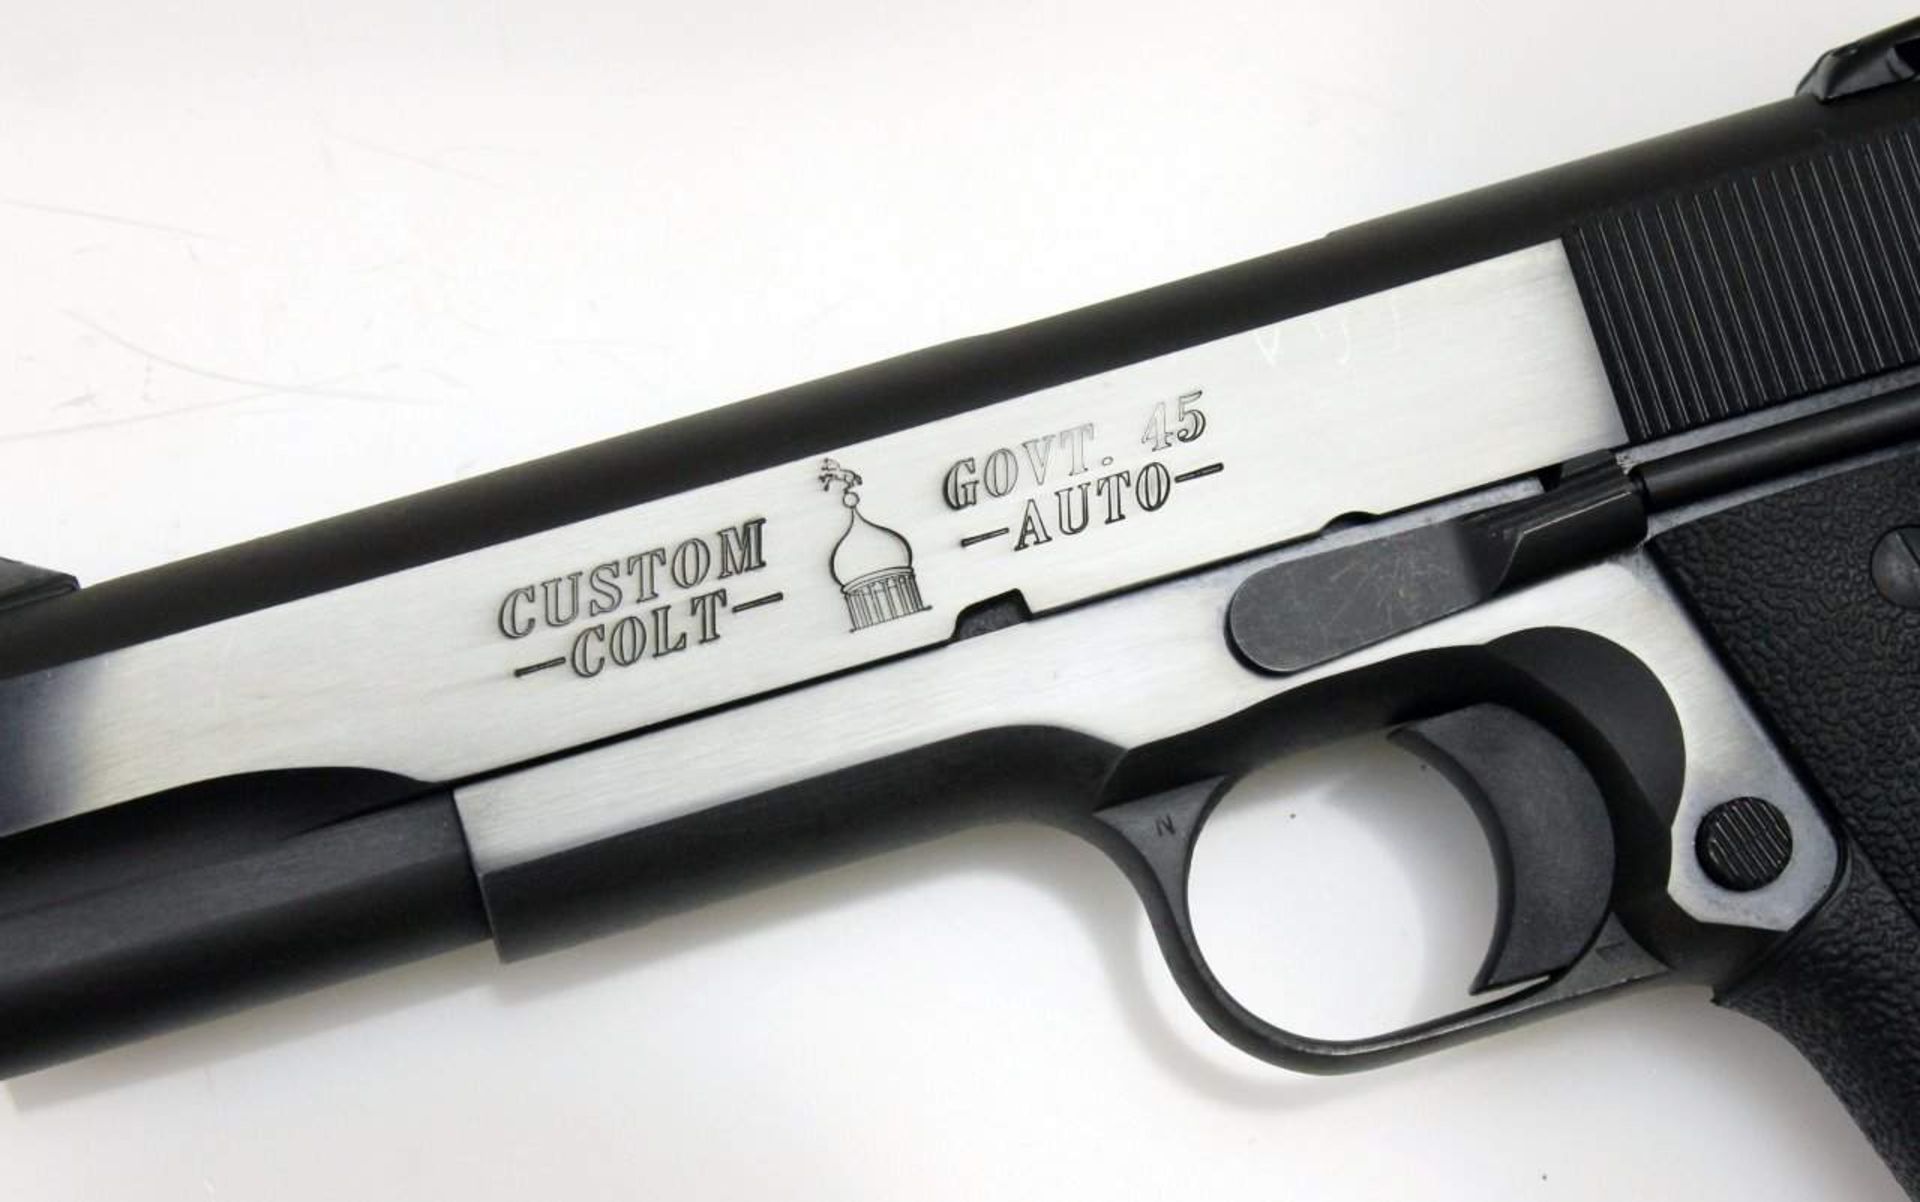 Selbstladepistole Colt, Modell: 1911 Custom Government - 1 of 1000 Cal. .45 ACP, S/N: 066CG0V, - Bild 5 aus 6